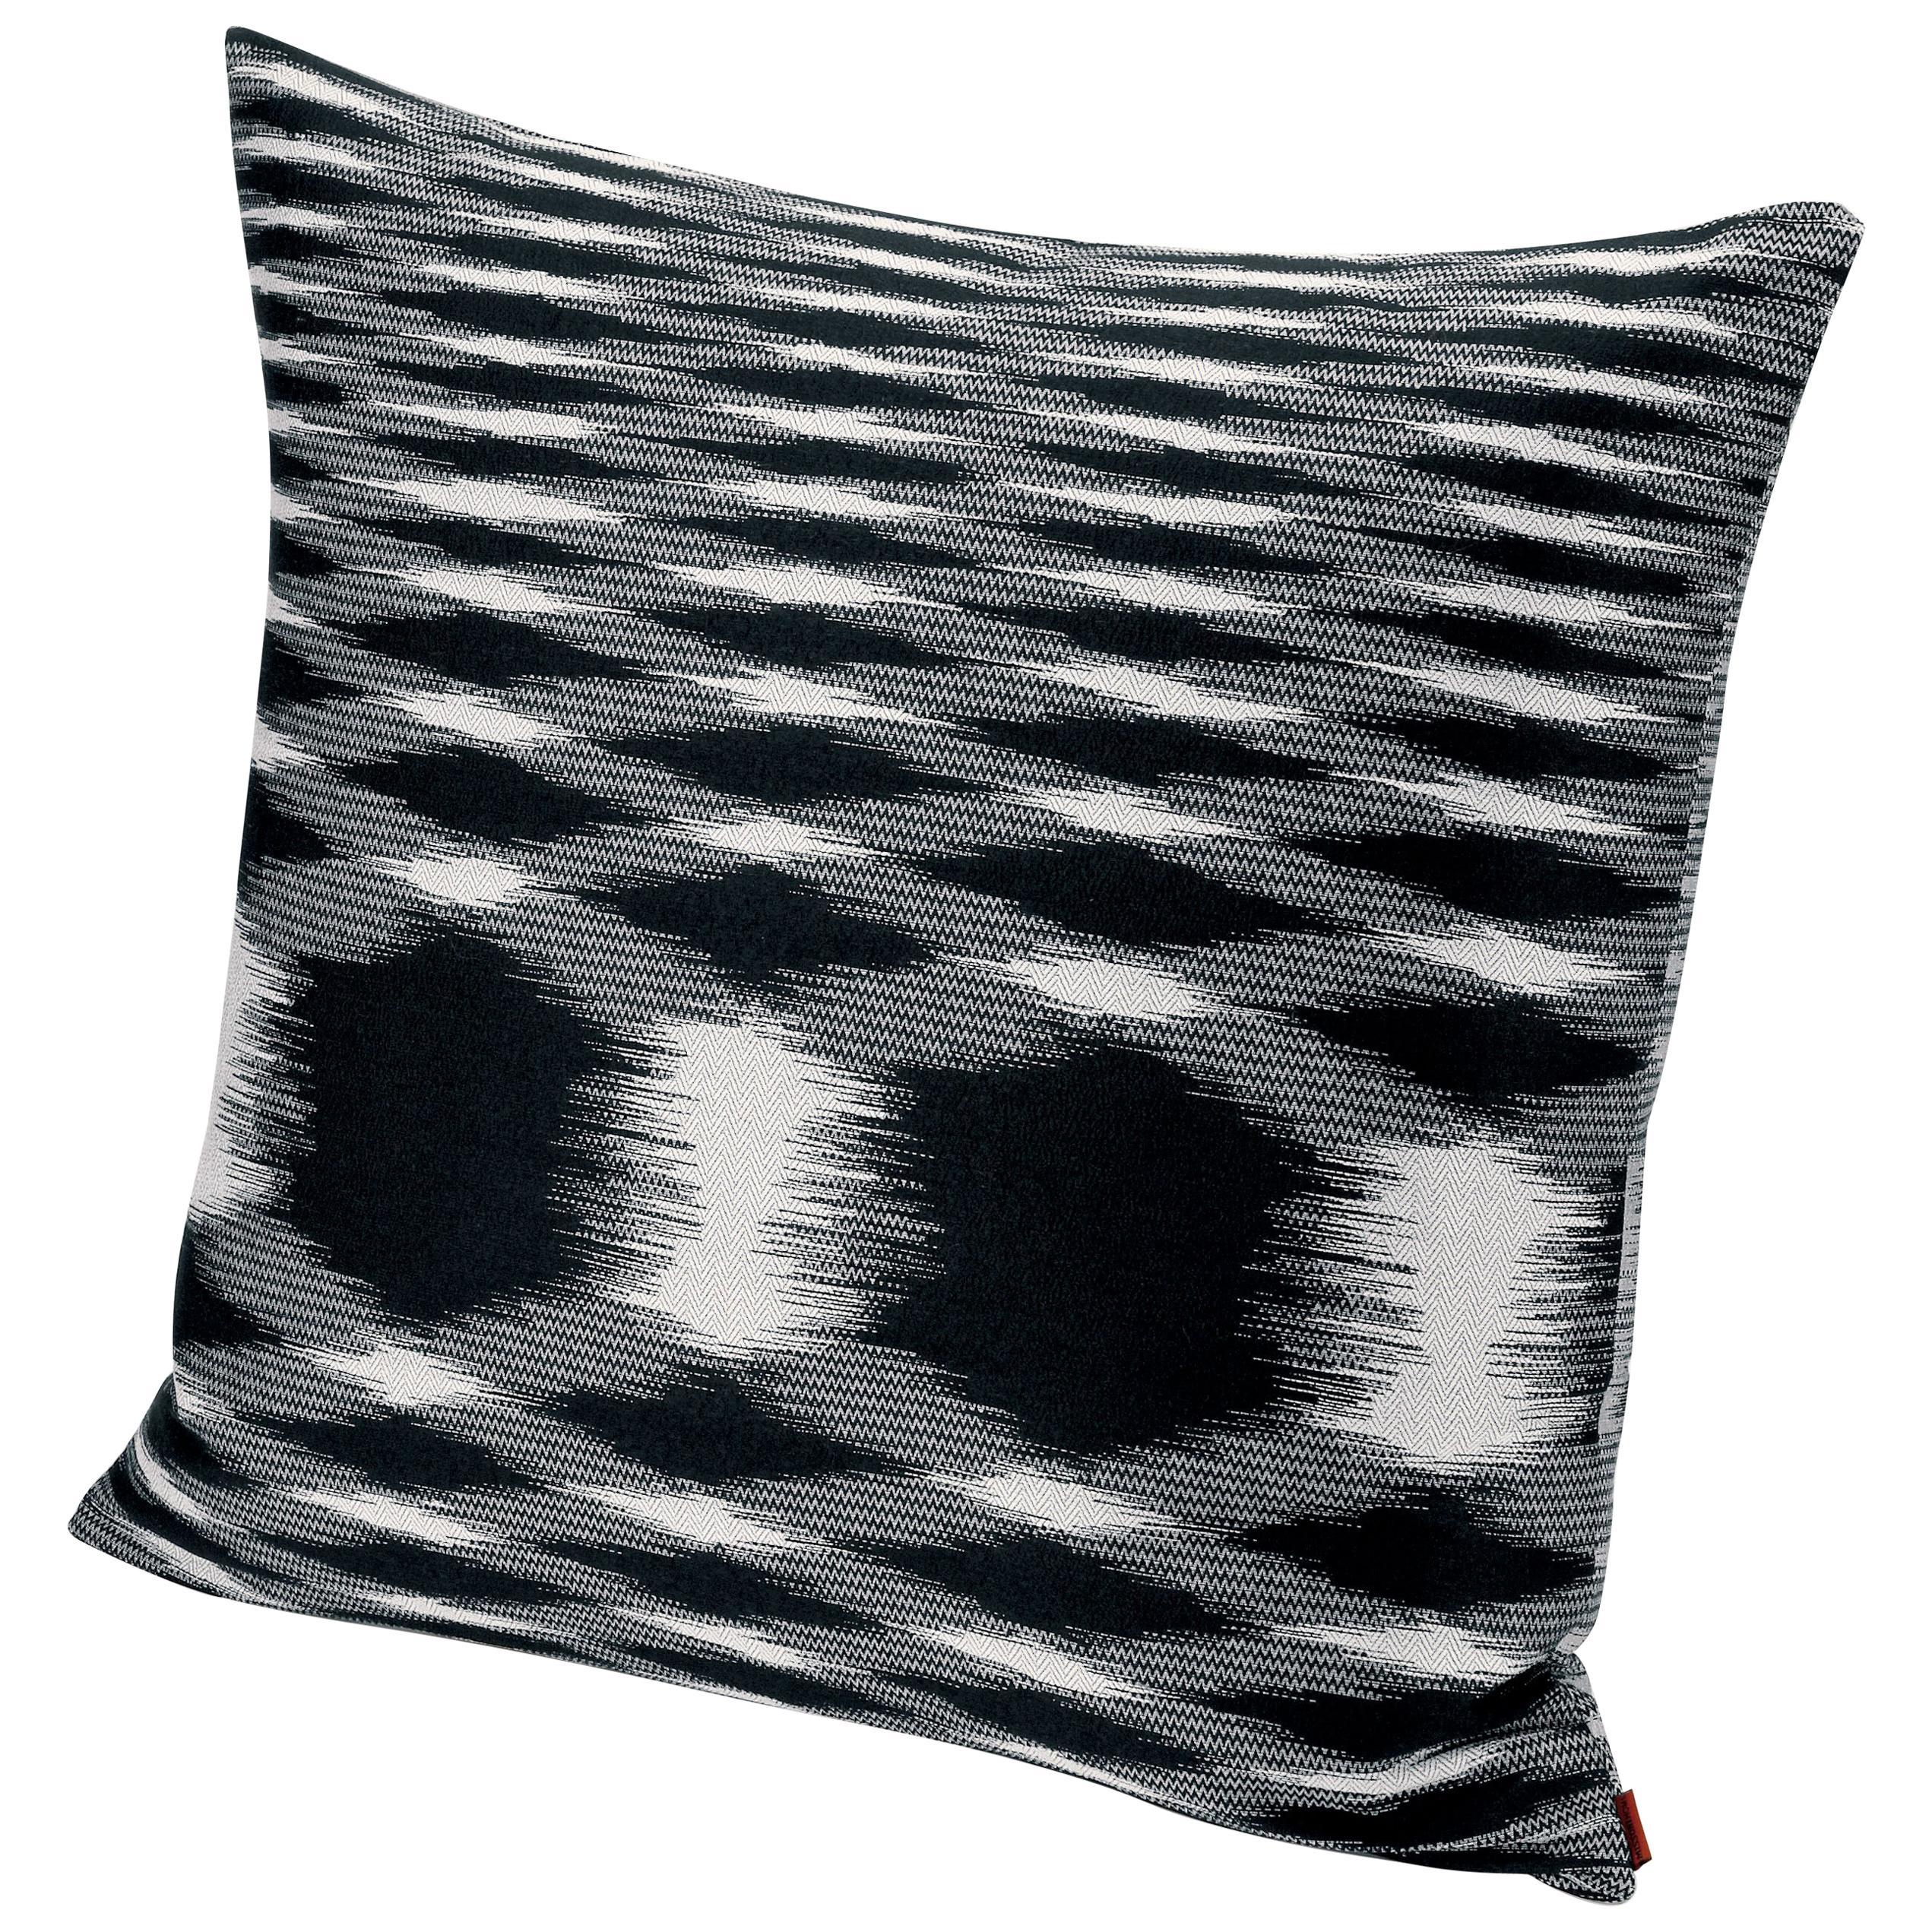 Missoni Home Svezia Cushion in Black and White Flame Print For Sale